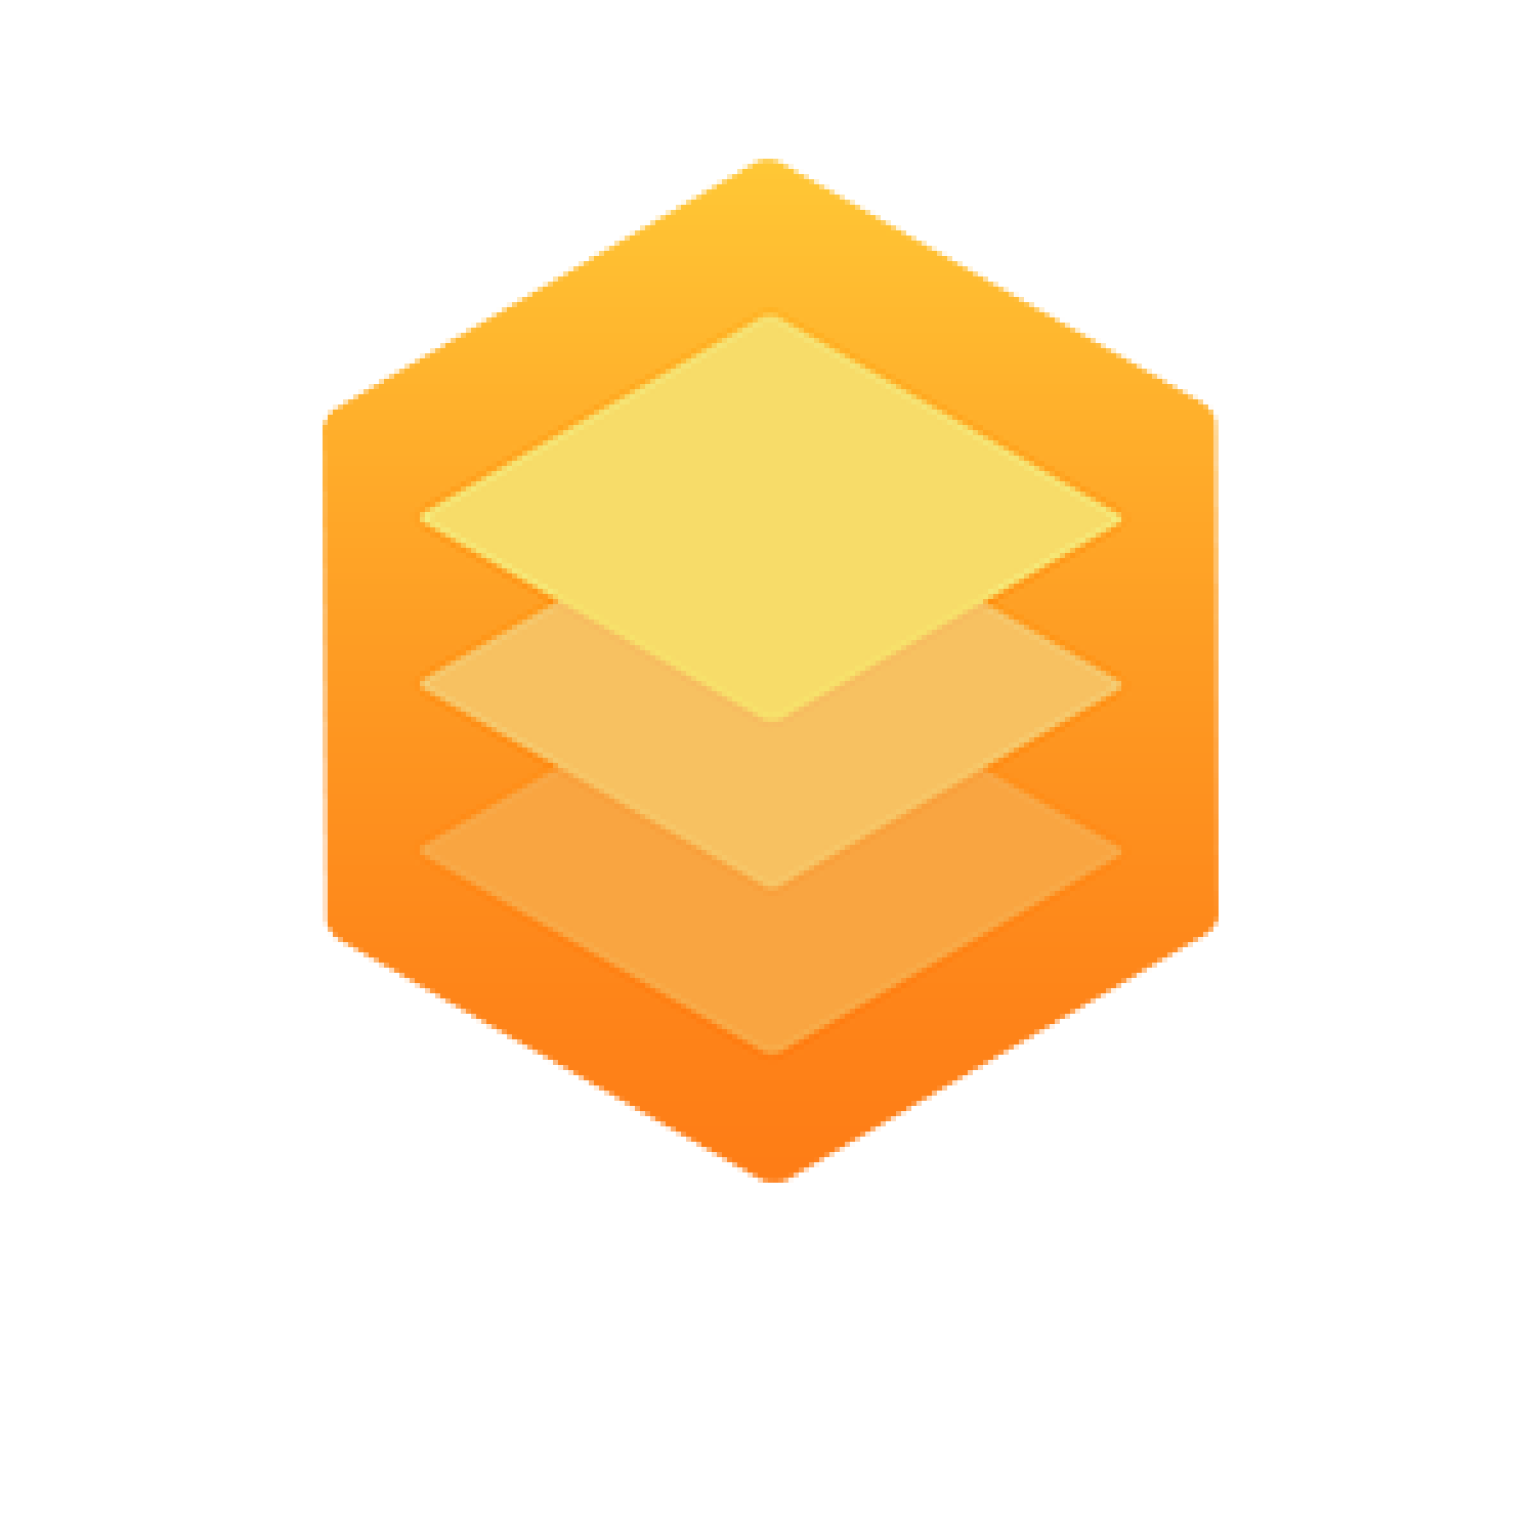 packetstream review